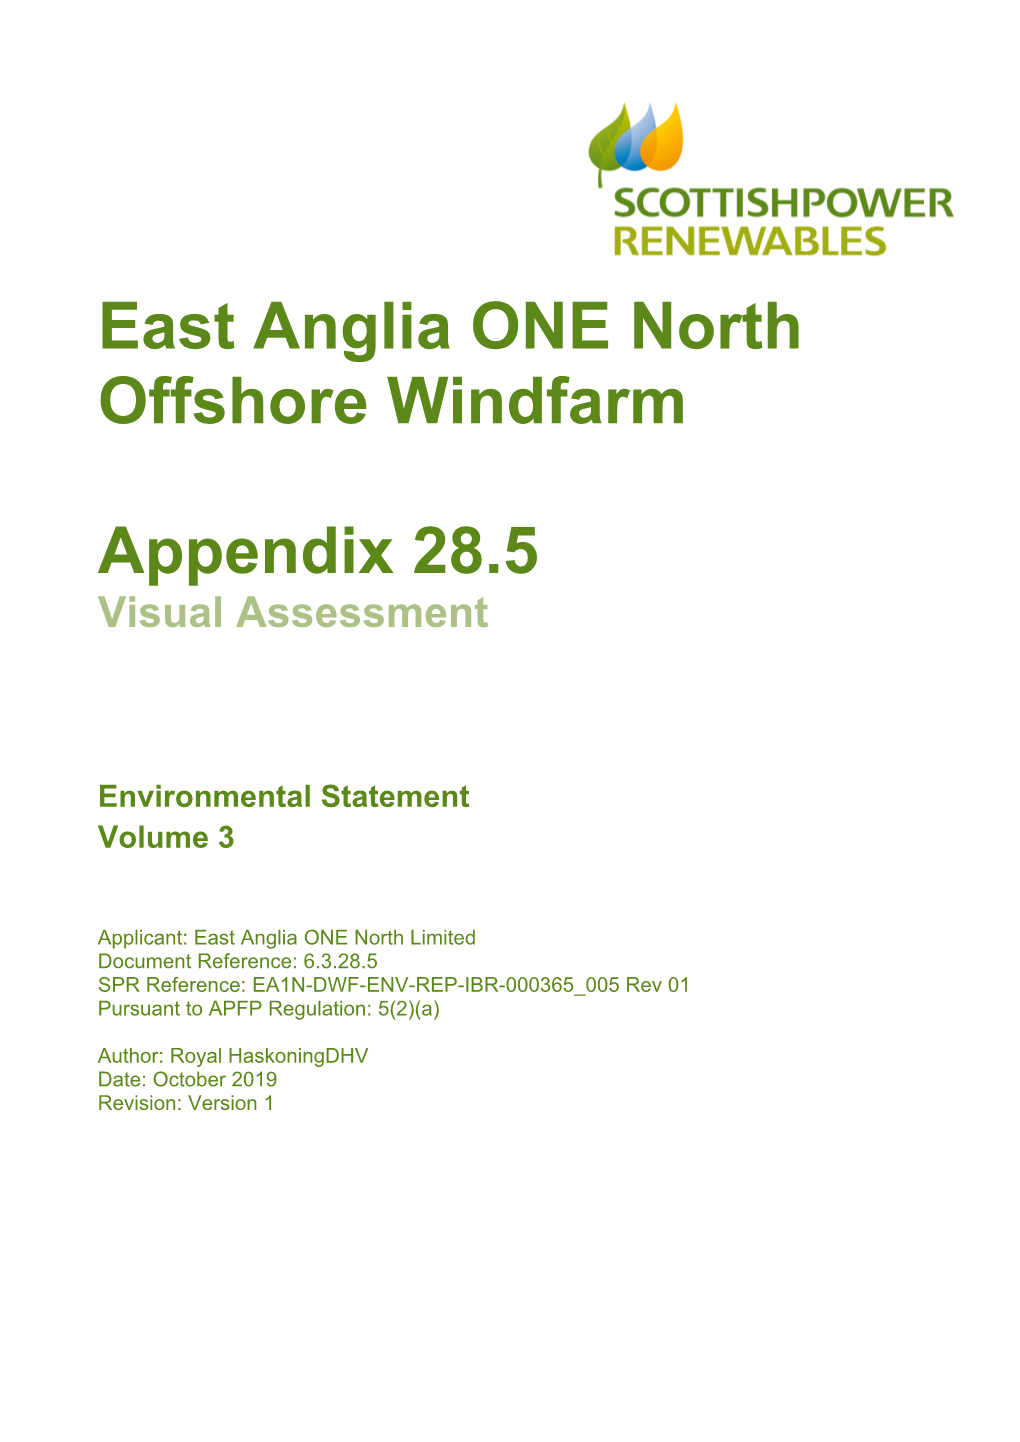 East Anglia ONE North Offshore Windfarm Appendix 28.5